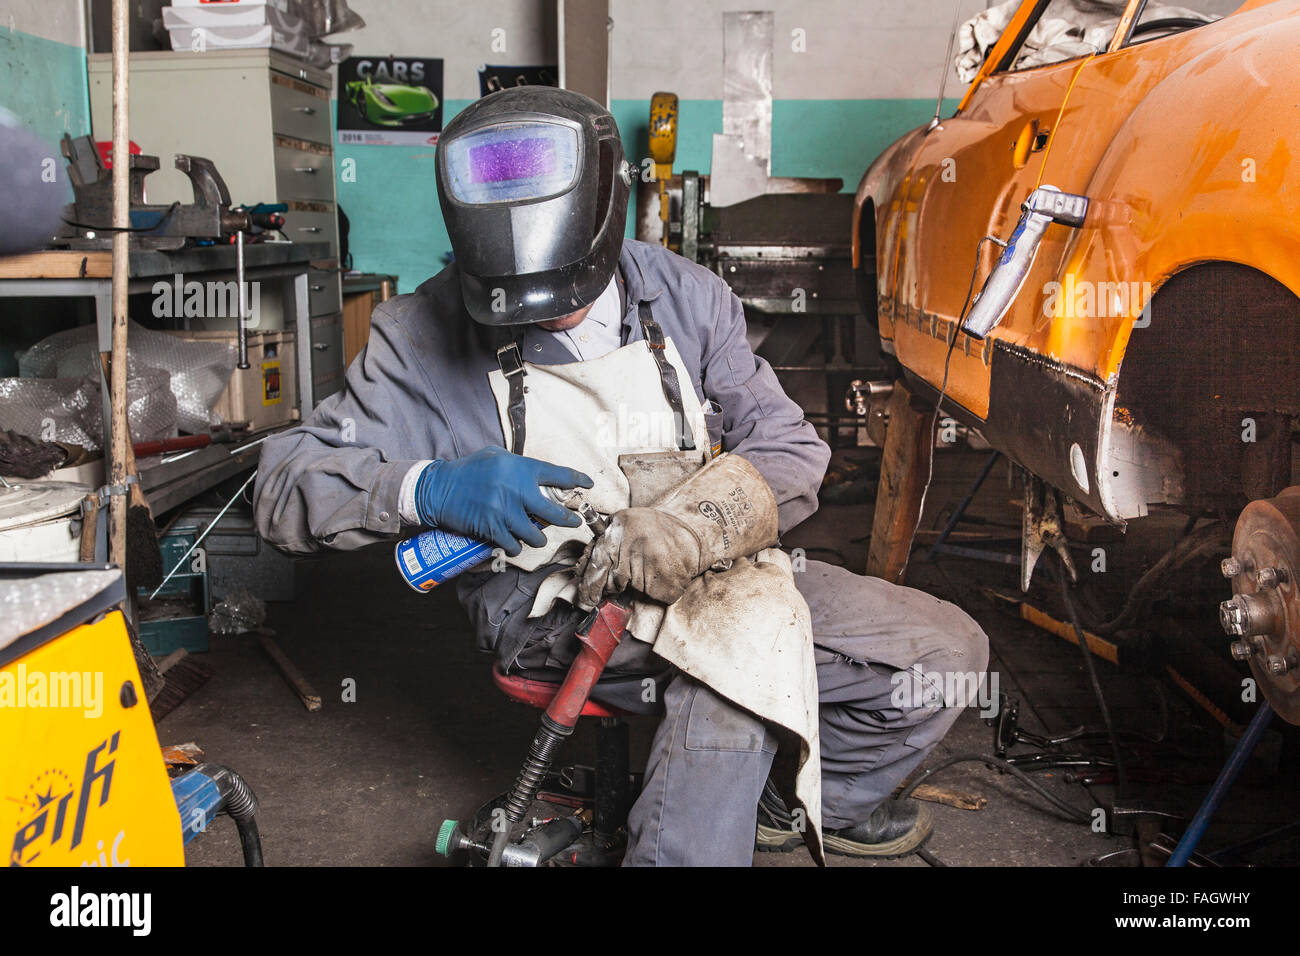 Coachbuilder restores a classic car VW Karmann Ghia. Welder cleans the welding equipment. Stock Photo